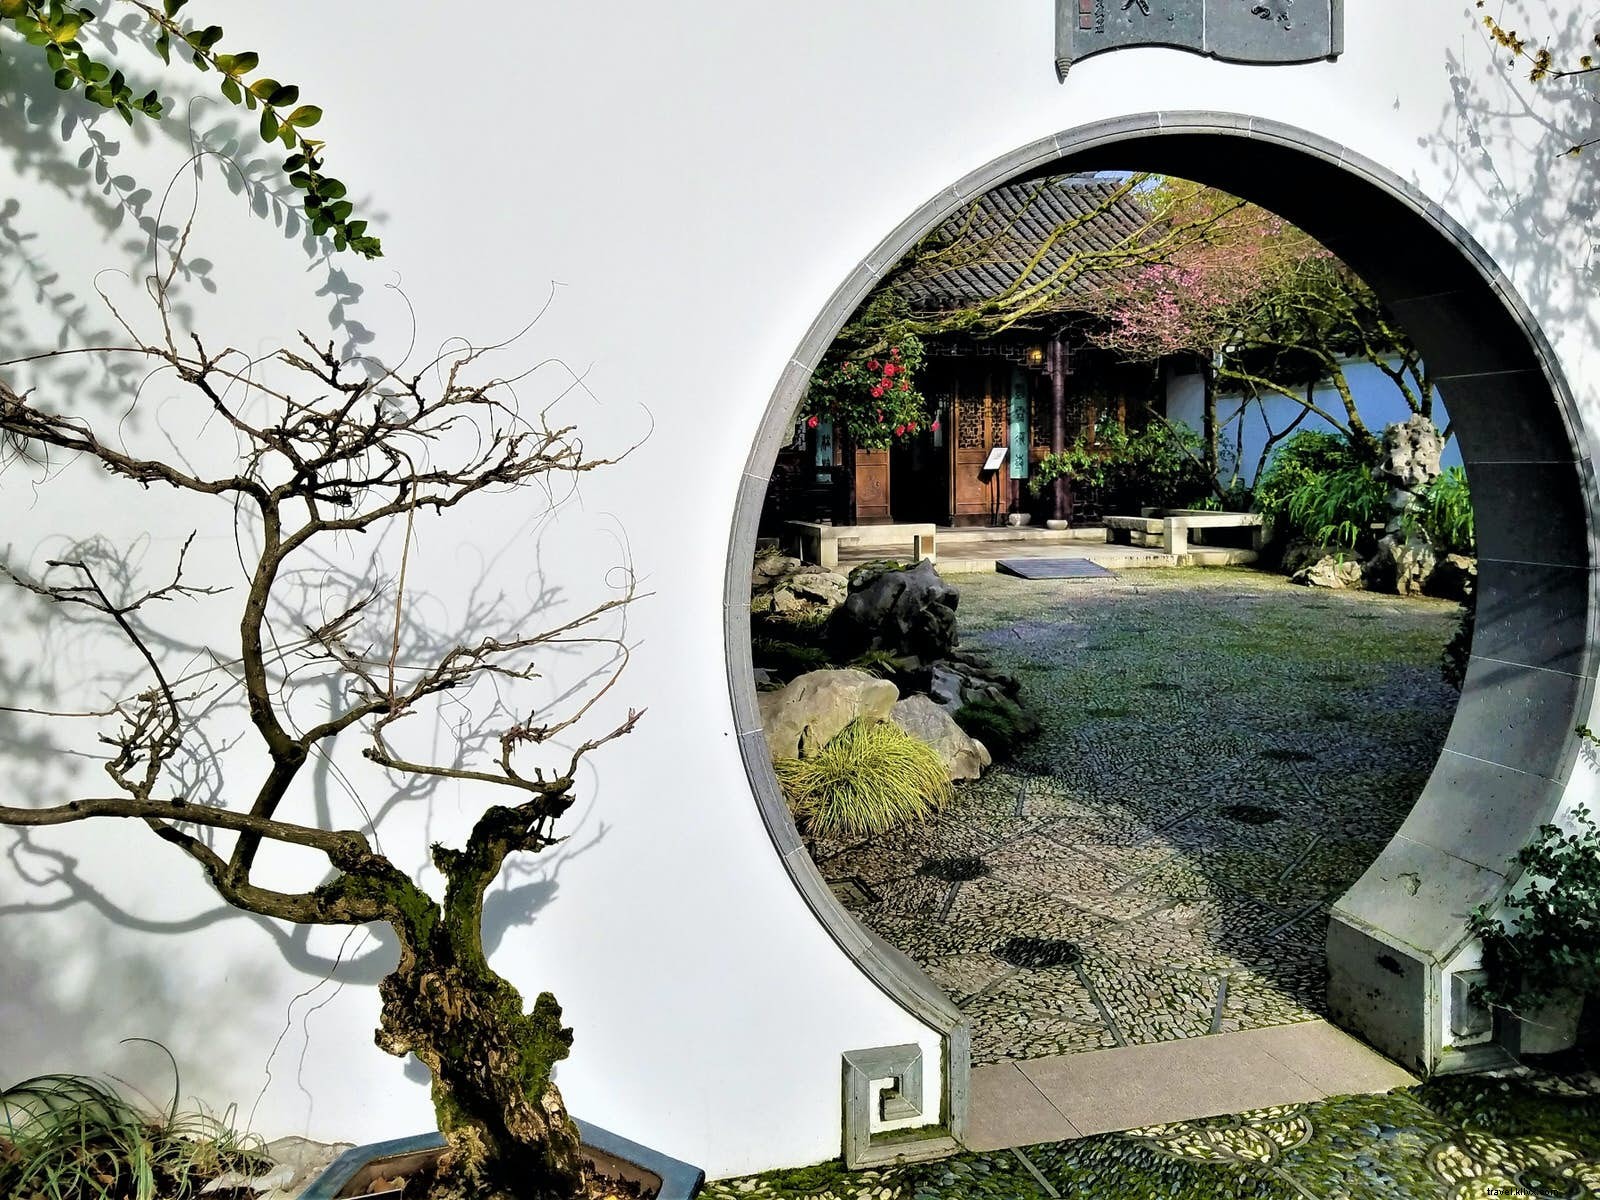 Jardim para relaxar:os elegantes jardins chineses clássicos de Suzhou 